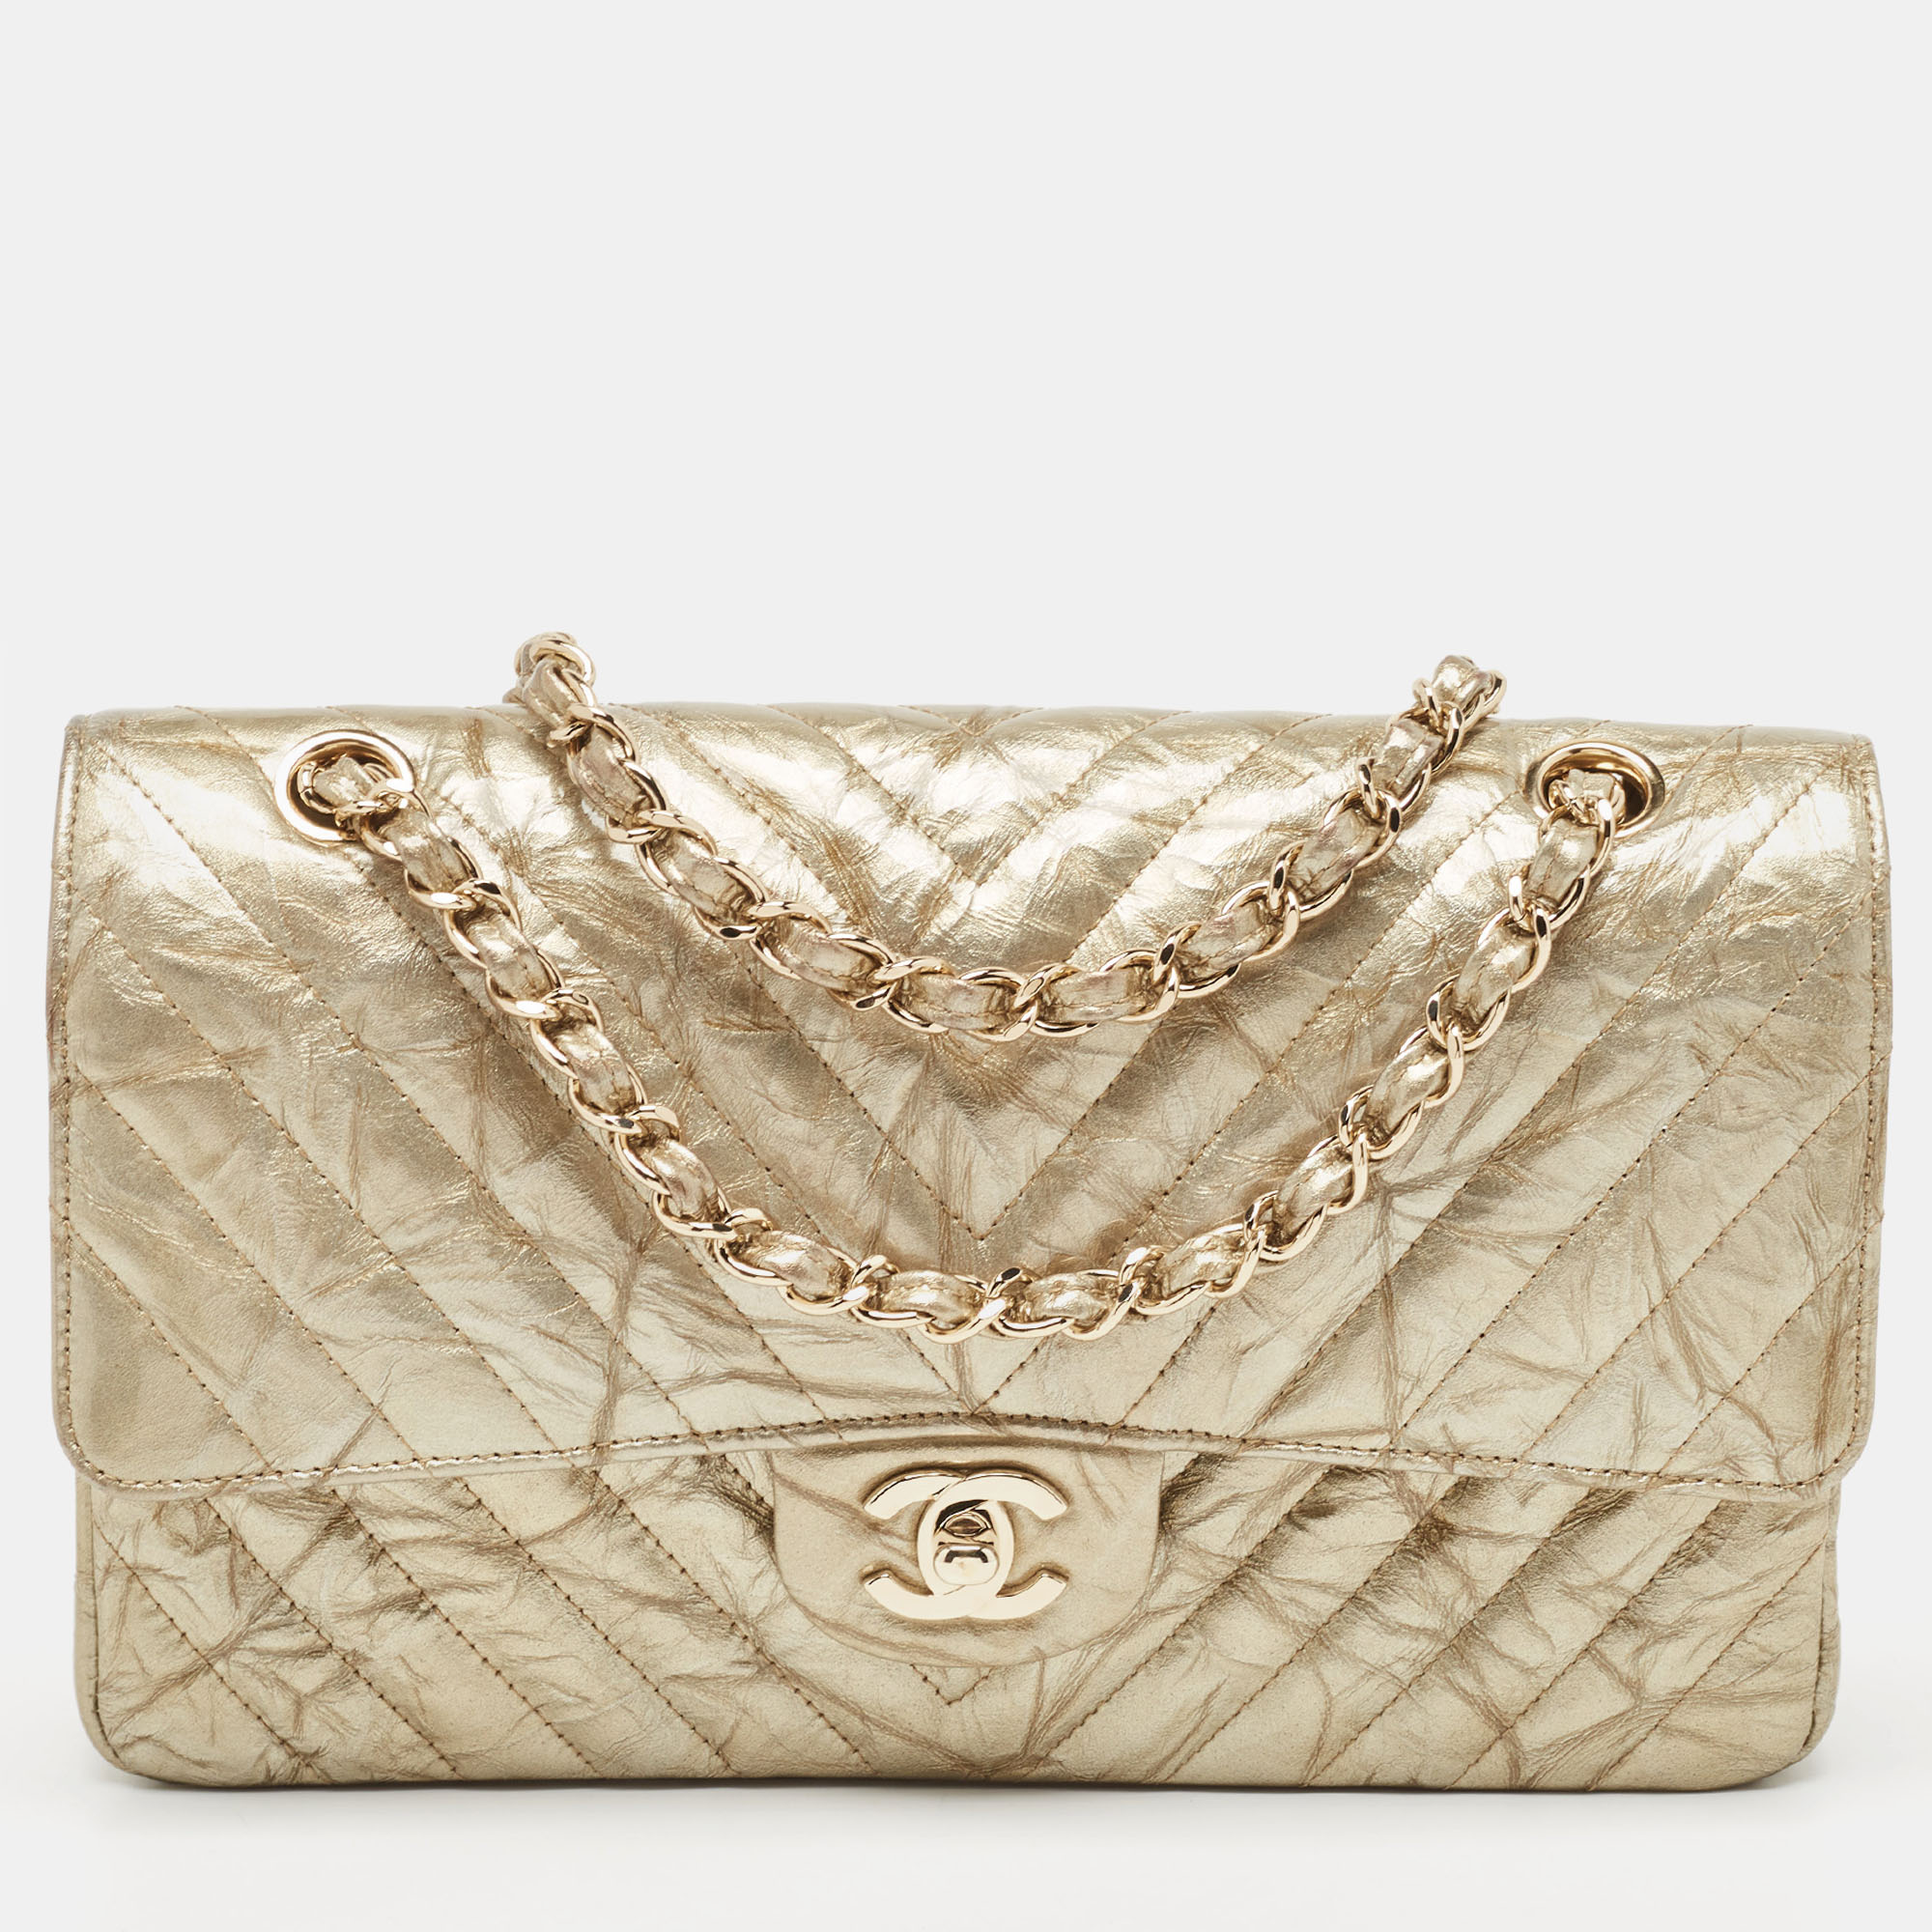 Chanel gold chevron patent leather medium classic double flap bag